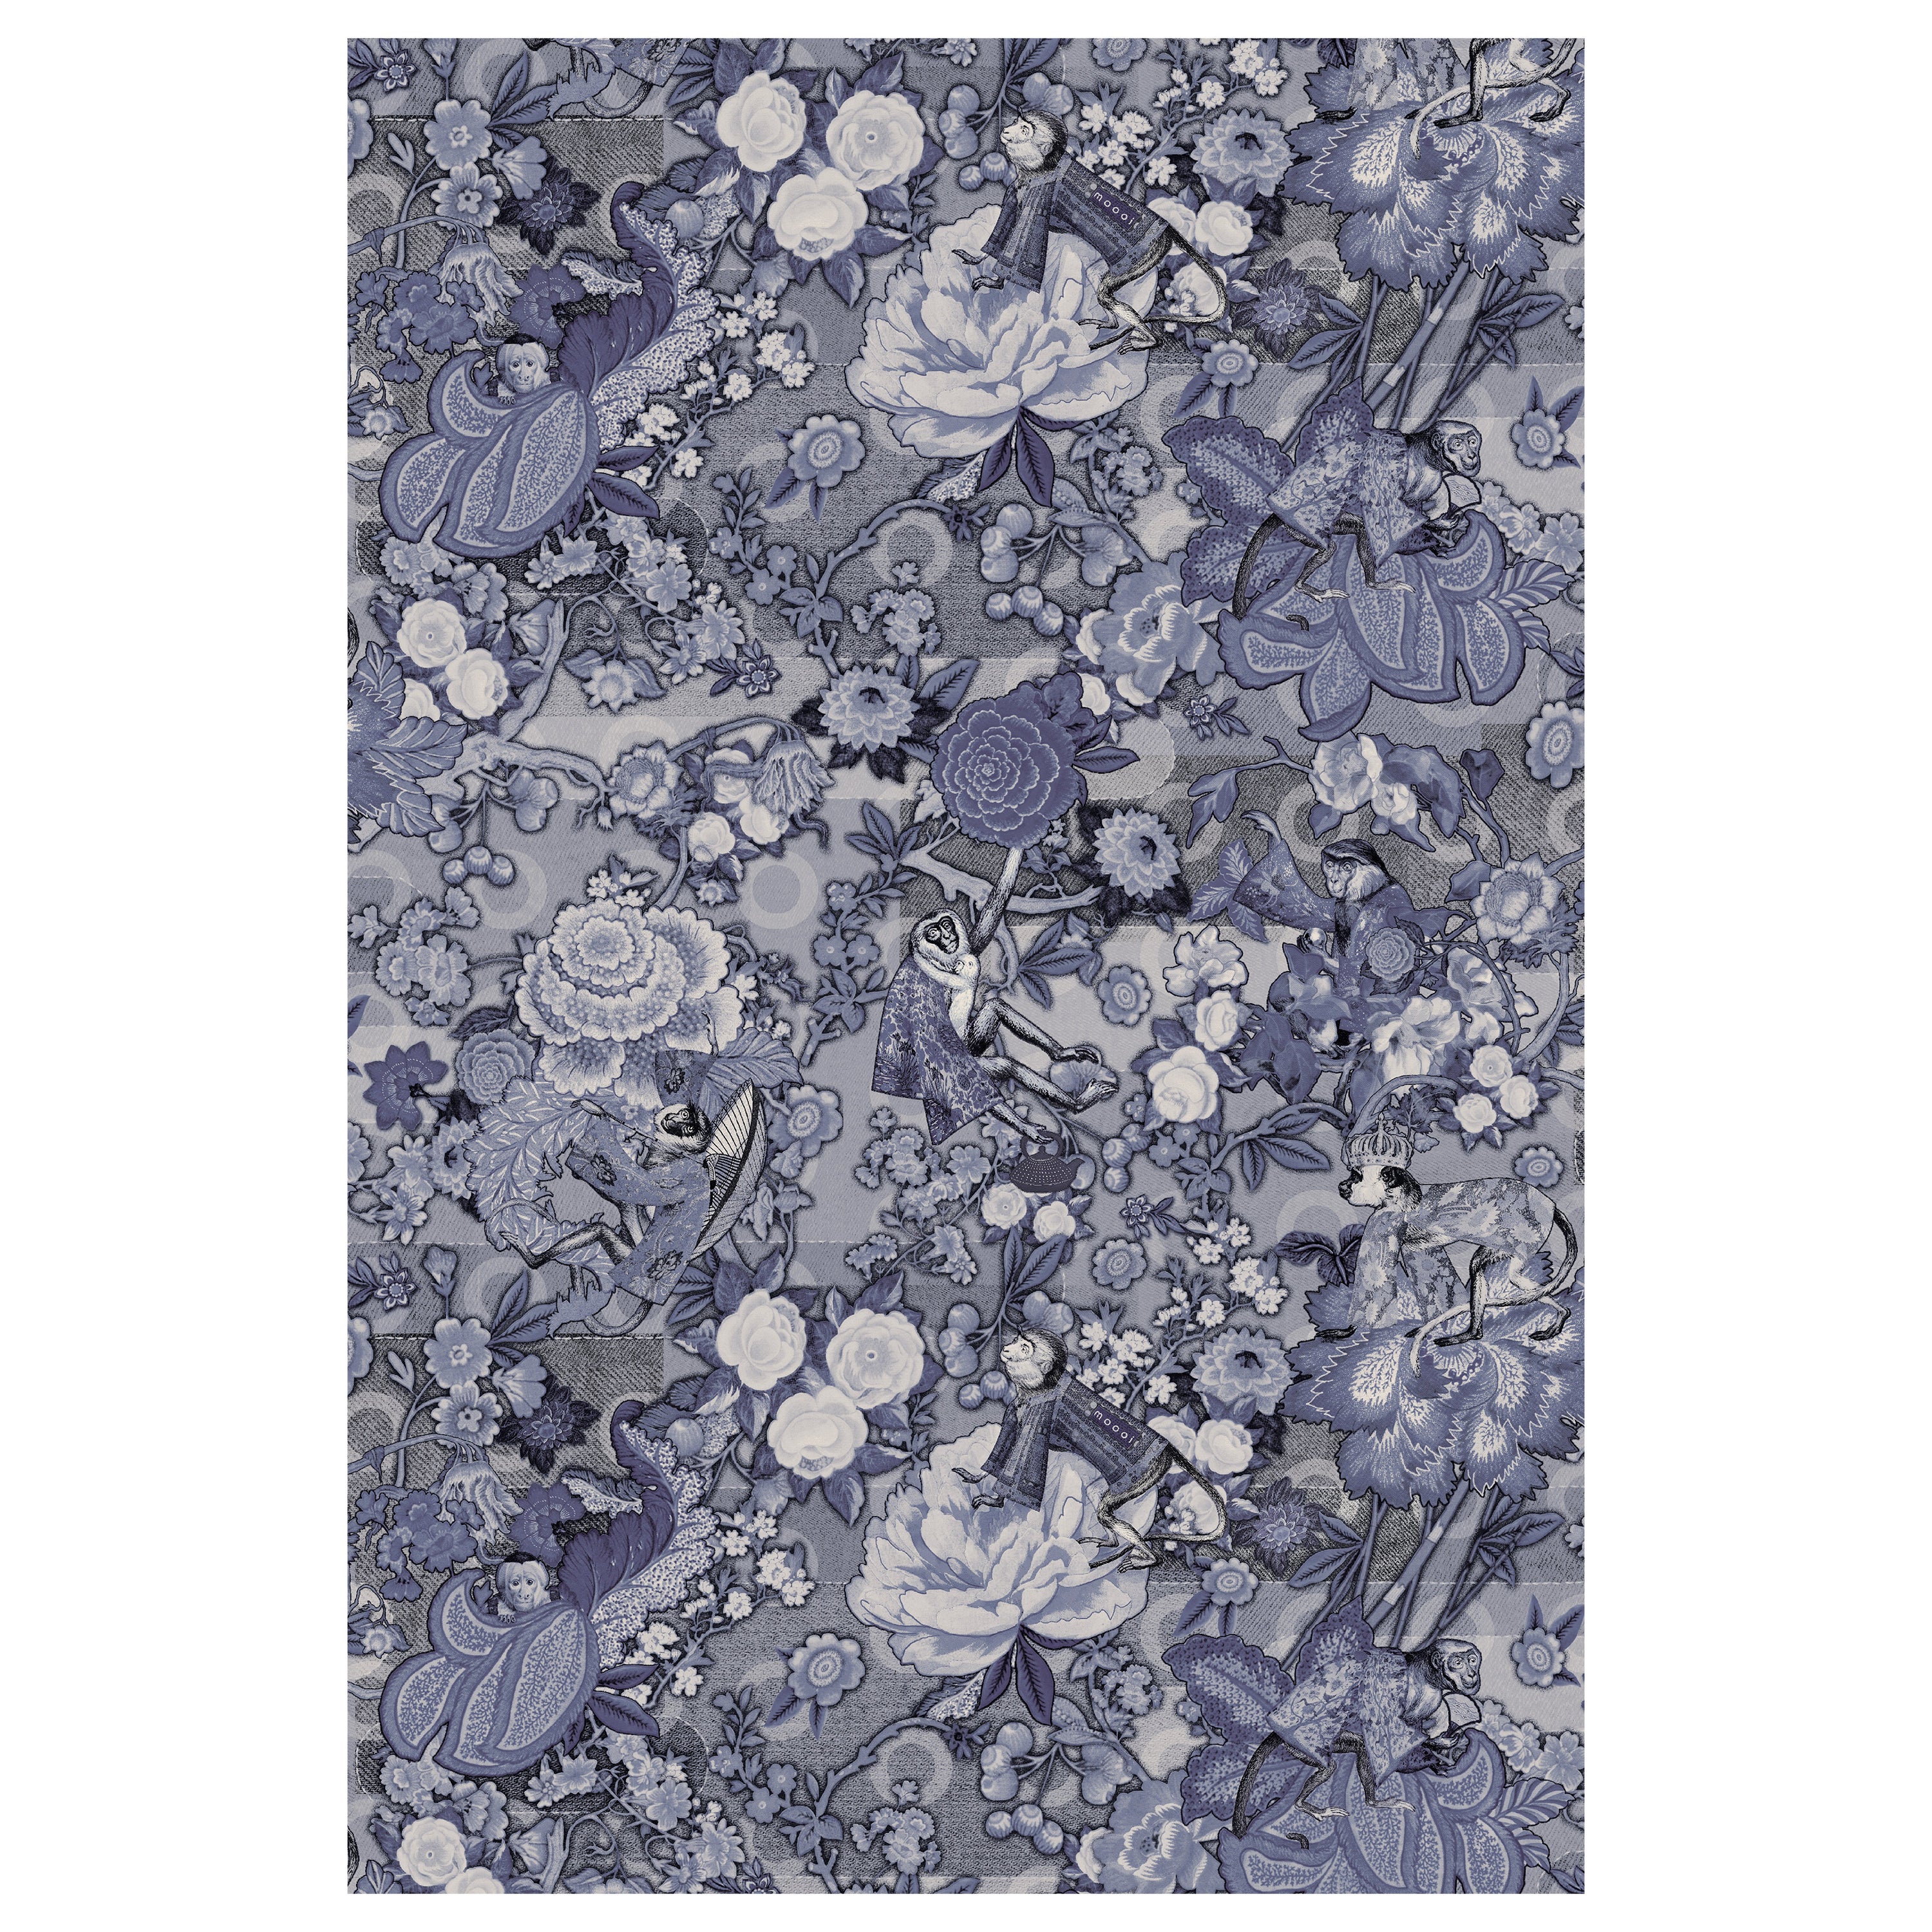 Moooi - Petit tapis rectangulaire Rendezvous Tokyo bleu Ming en polyamide à fil souple